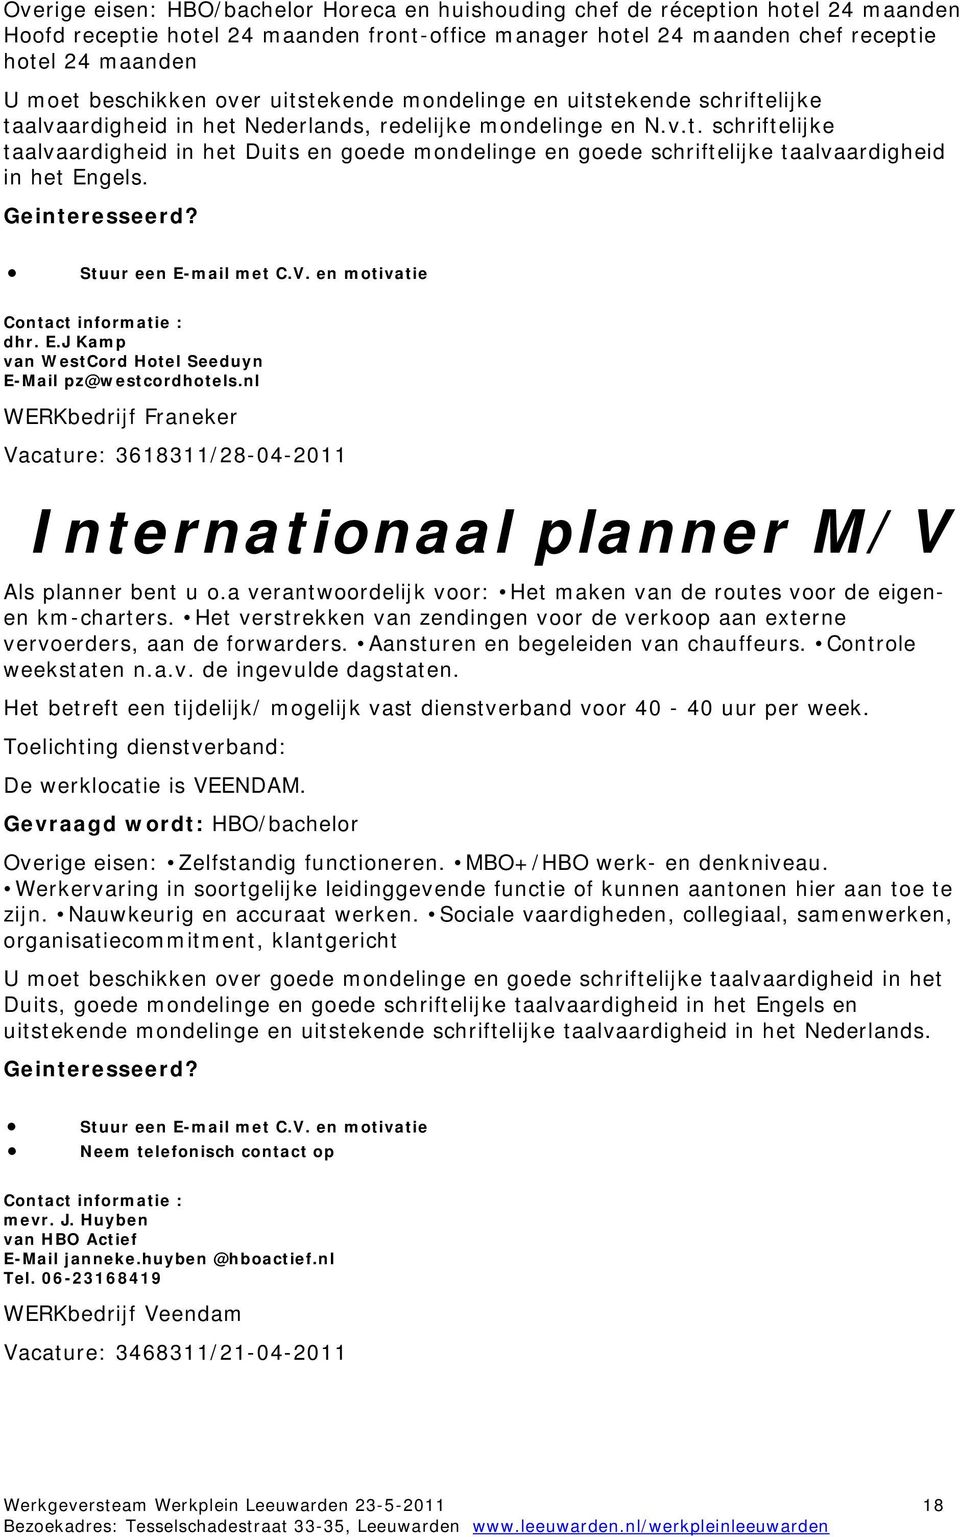 dhr. E.J Kamp van WestCord Hotel Seeduyn E-Mail pz@westcordhotels.nl WERKbedrijf Franeker Vacature: 3618311/28-04-2011 Internationaal planner M/V Als planner bent u o.